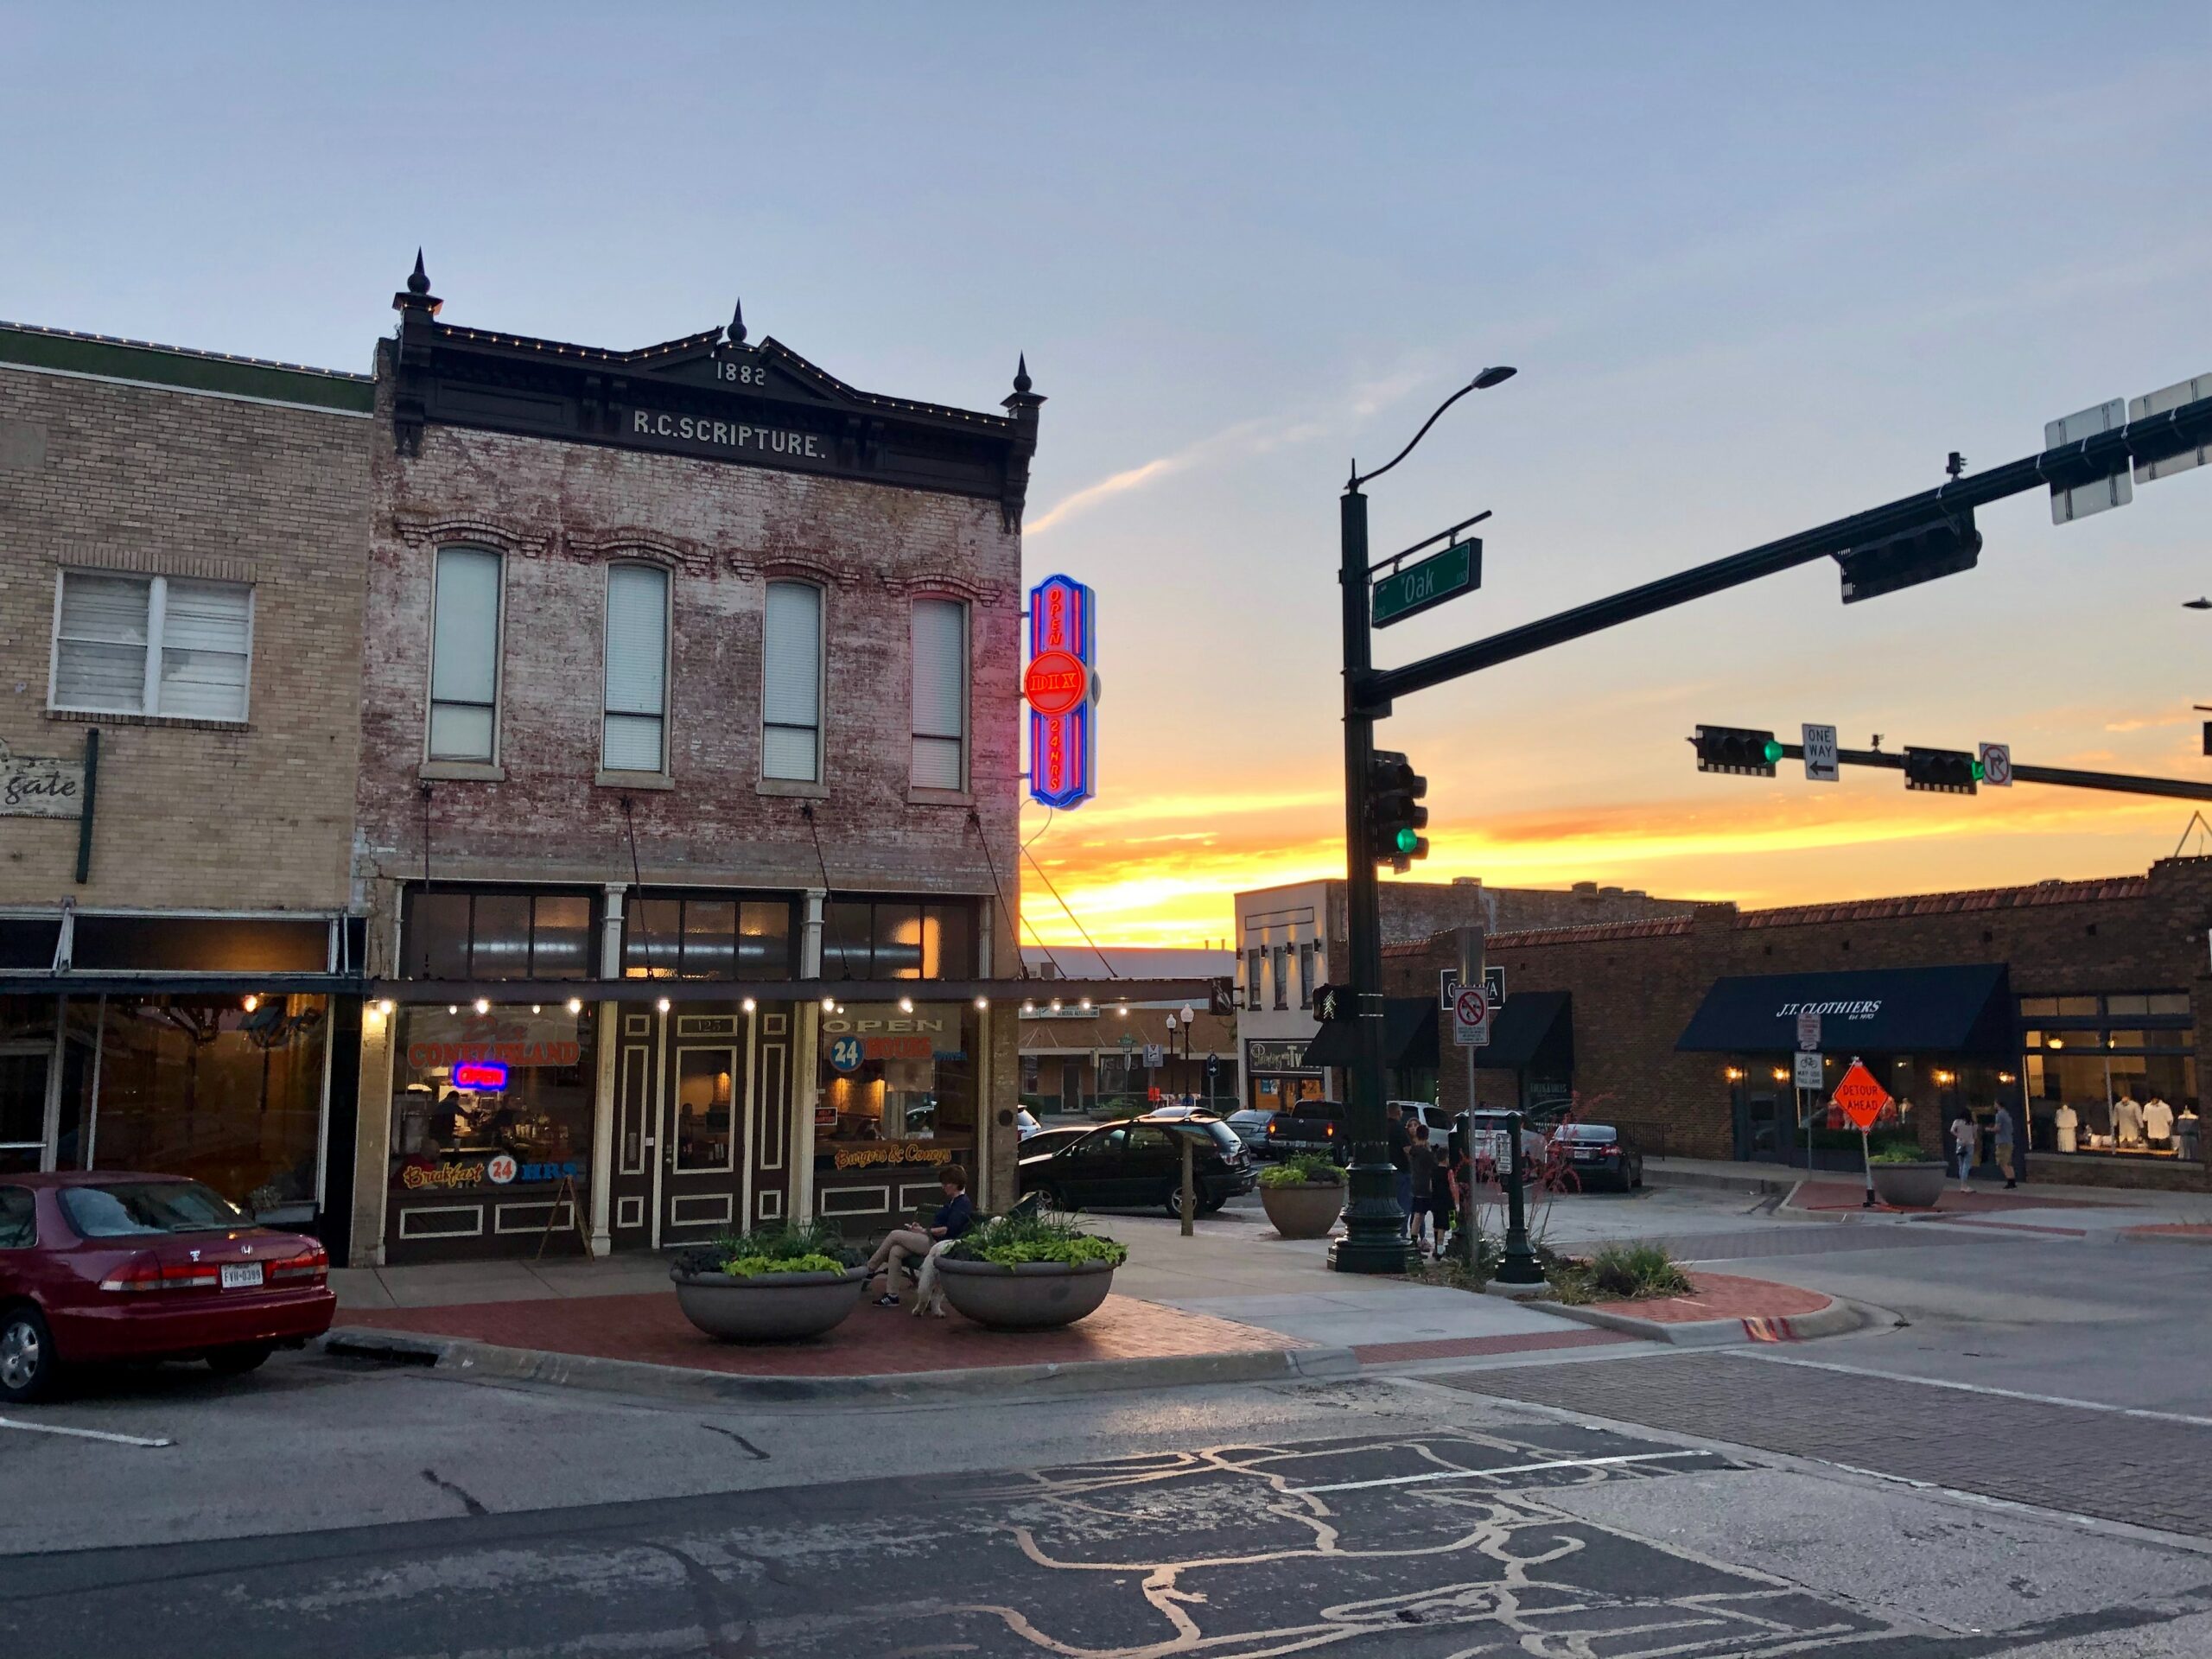 The sun sets behind a brick store in Denton, TX